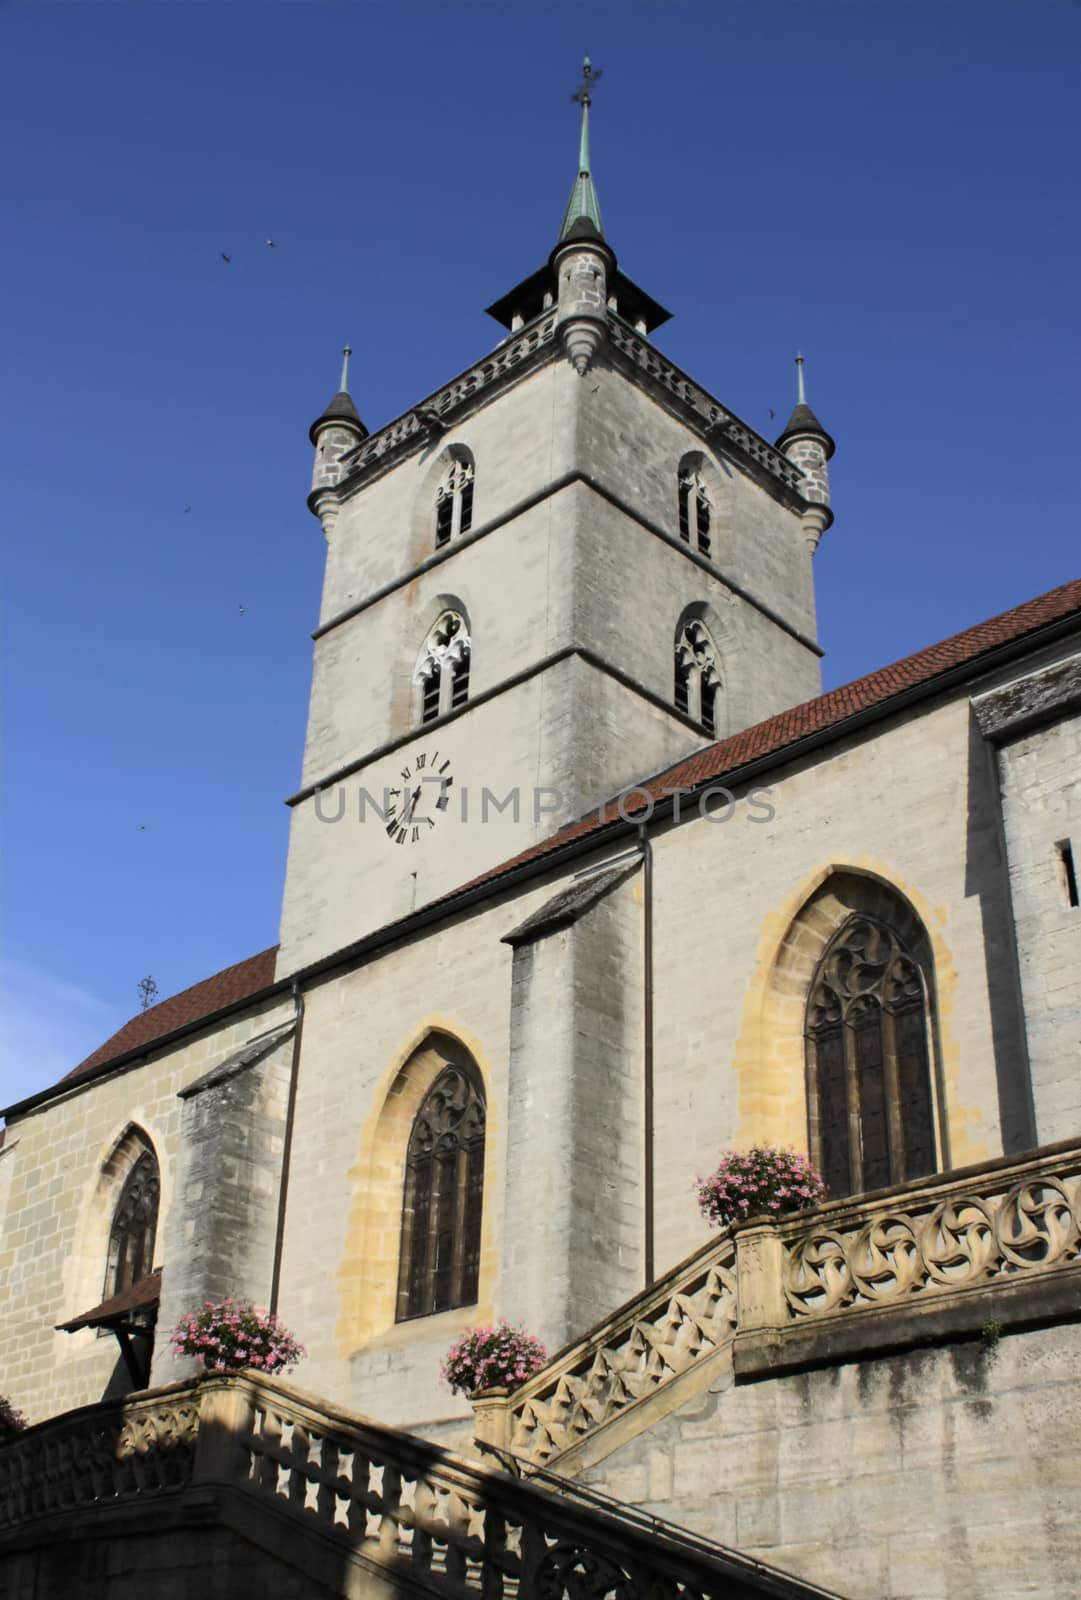 Church at Estavayer-le-Lac, Switzerland. by Elenaphotos21